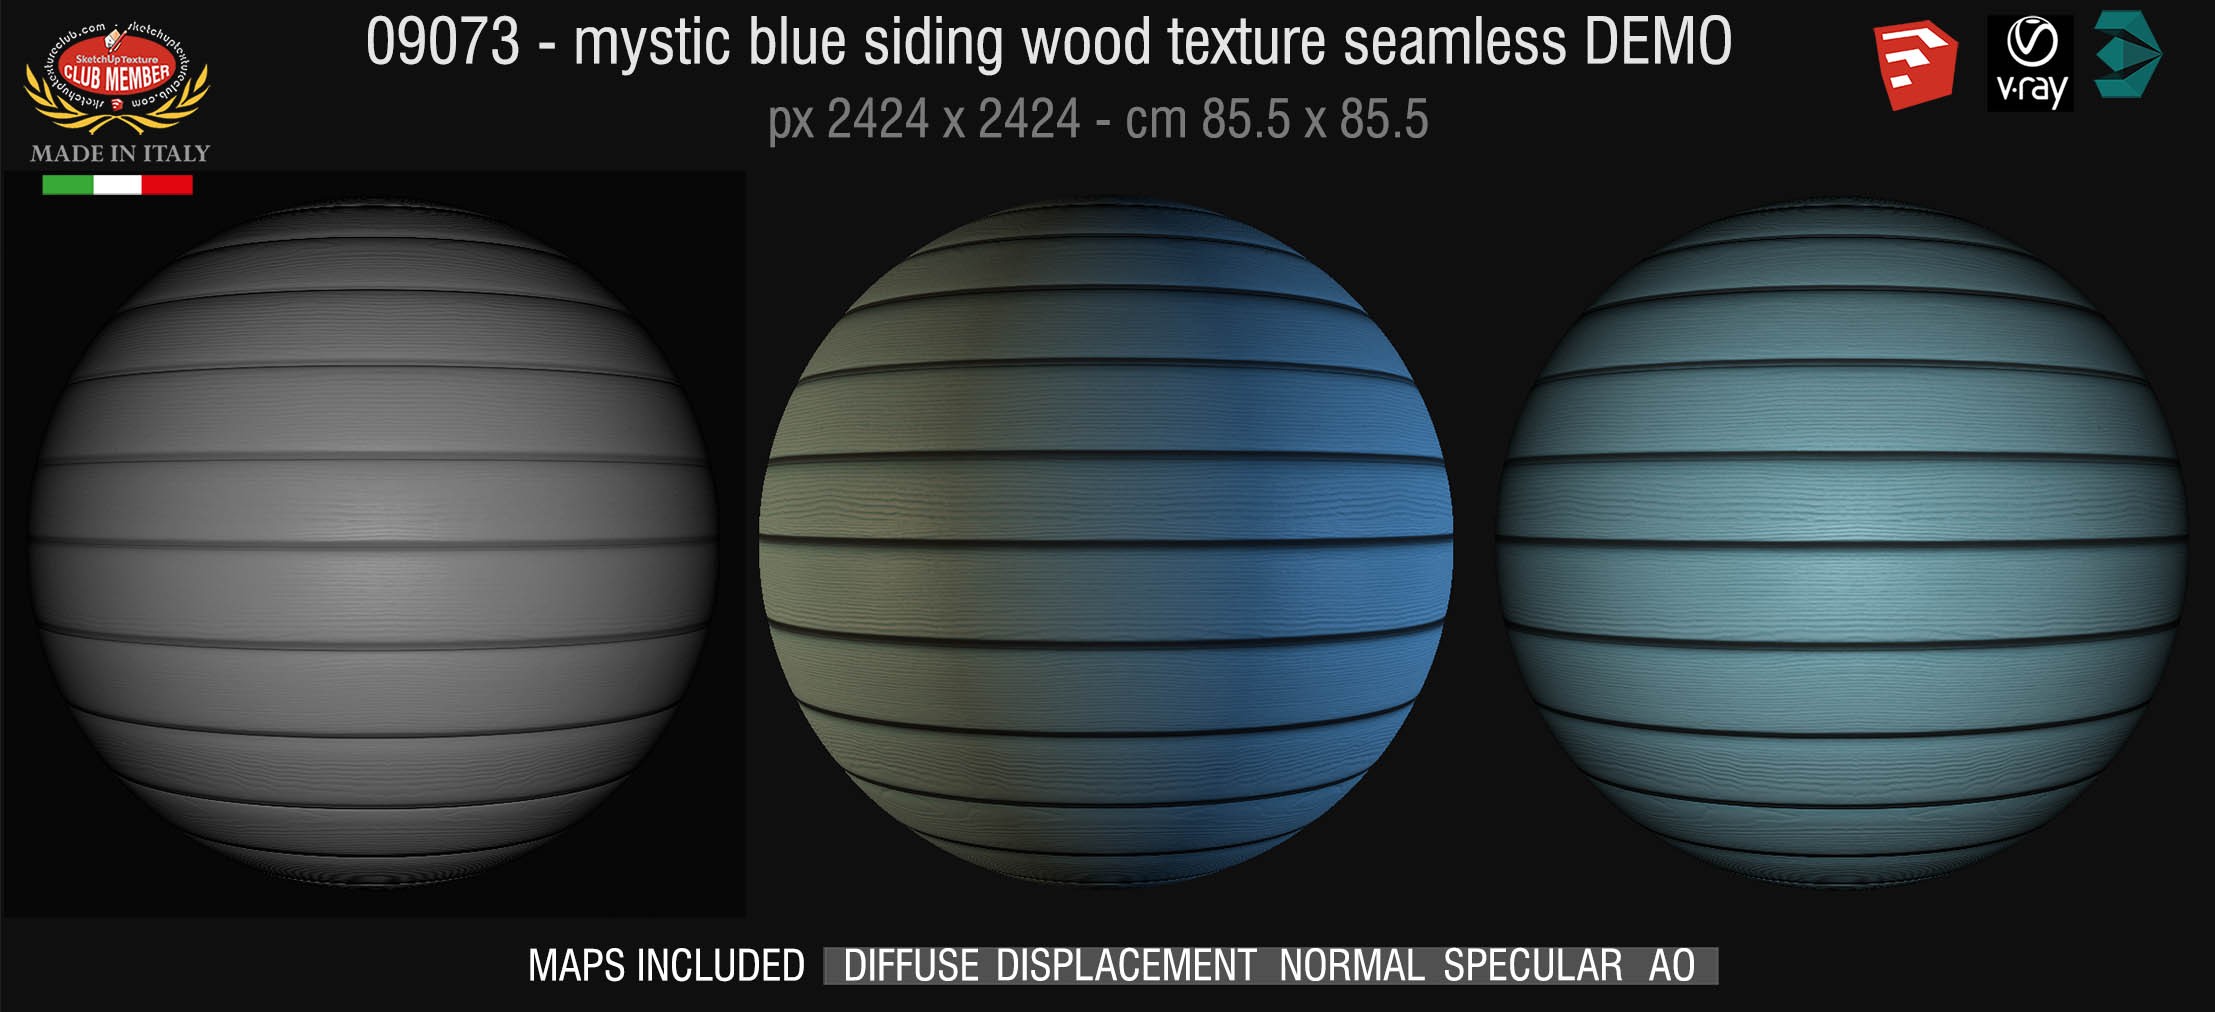 09073 HR Mystic blue siding wood texture + maps DEMO